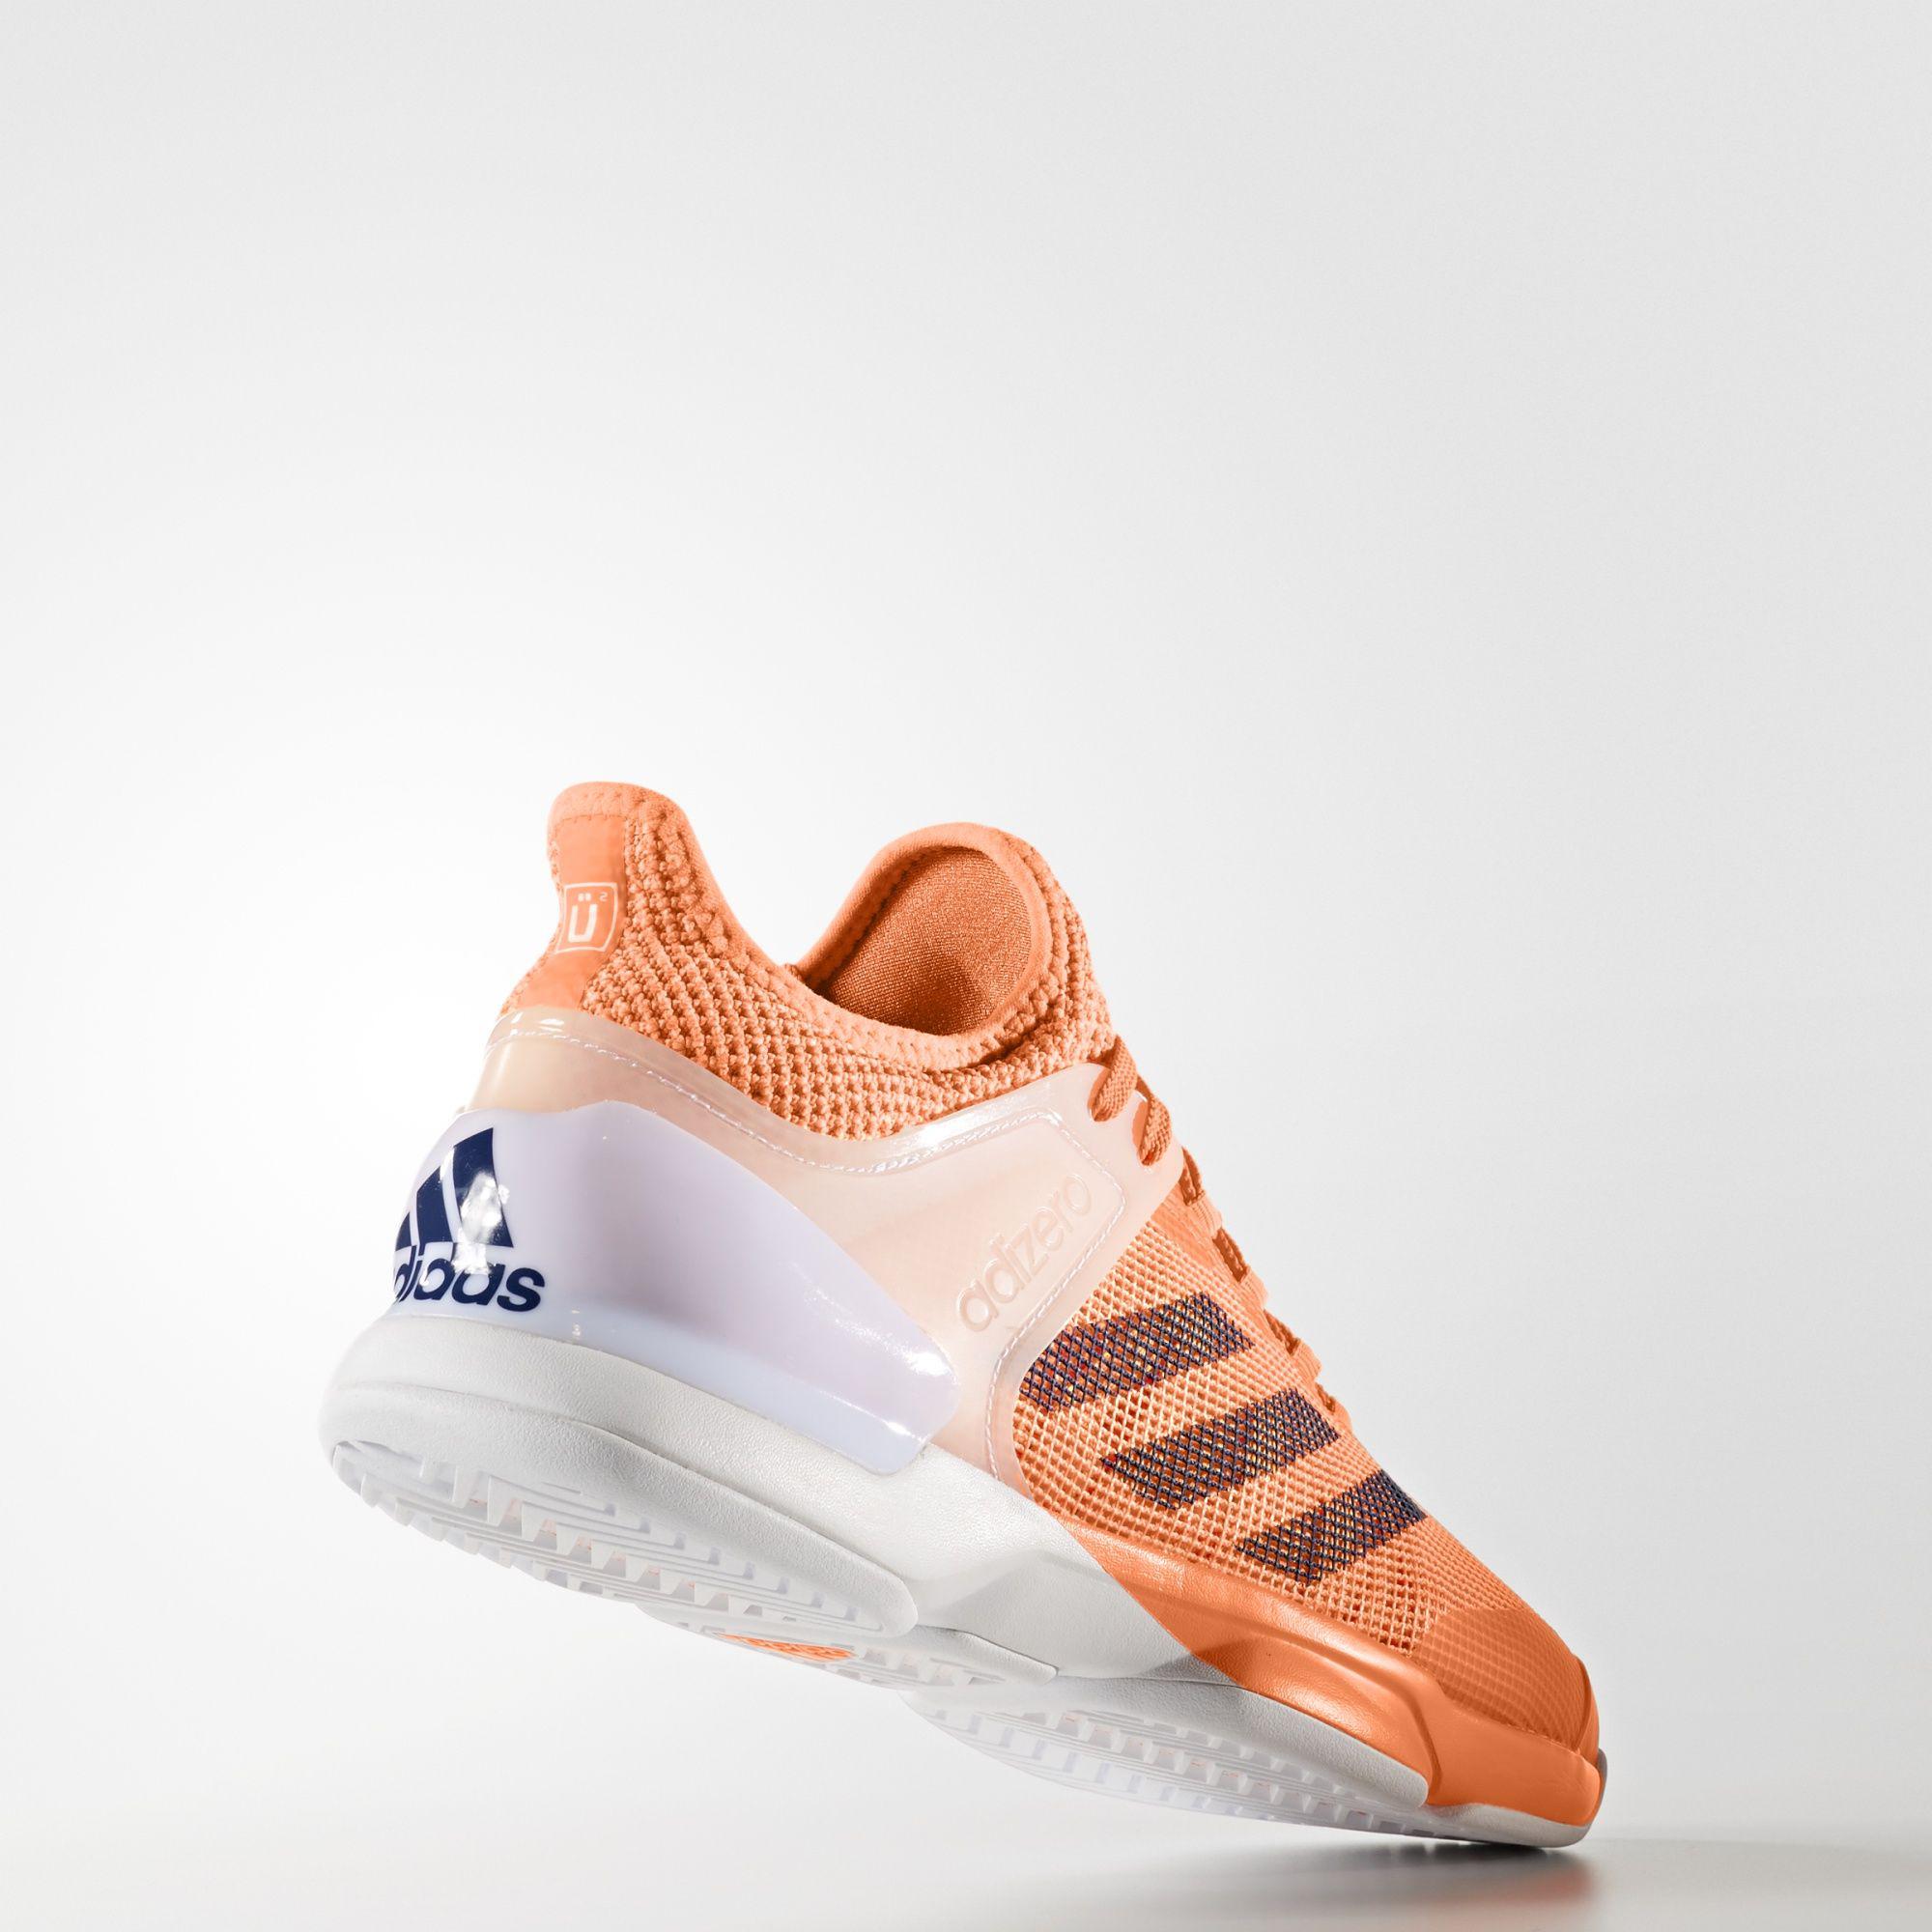 Adidas Mens Adizero Ubersonic 2.0 Tennis Shoes - Glow Orange ...